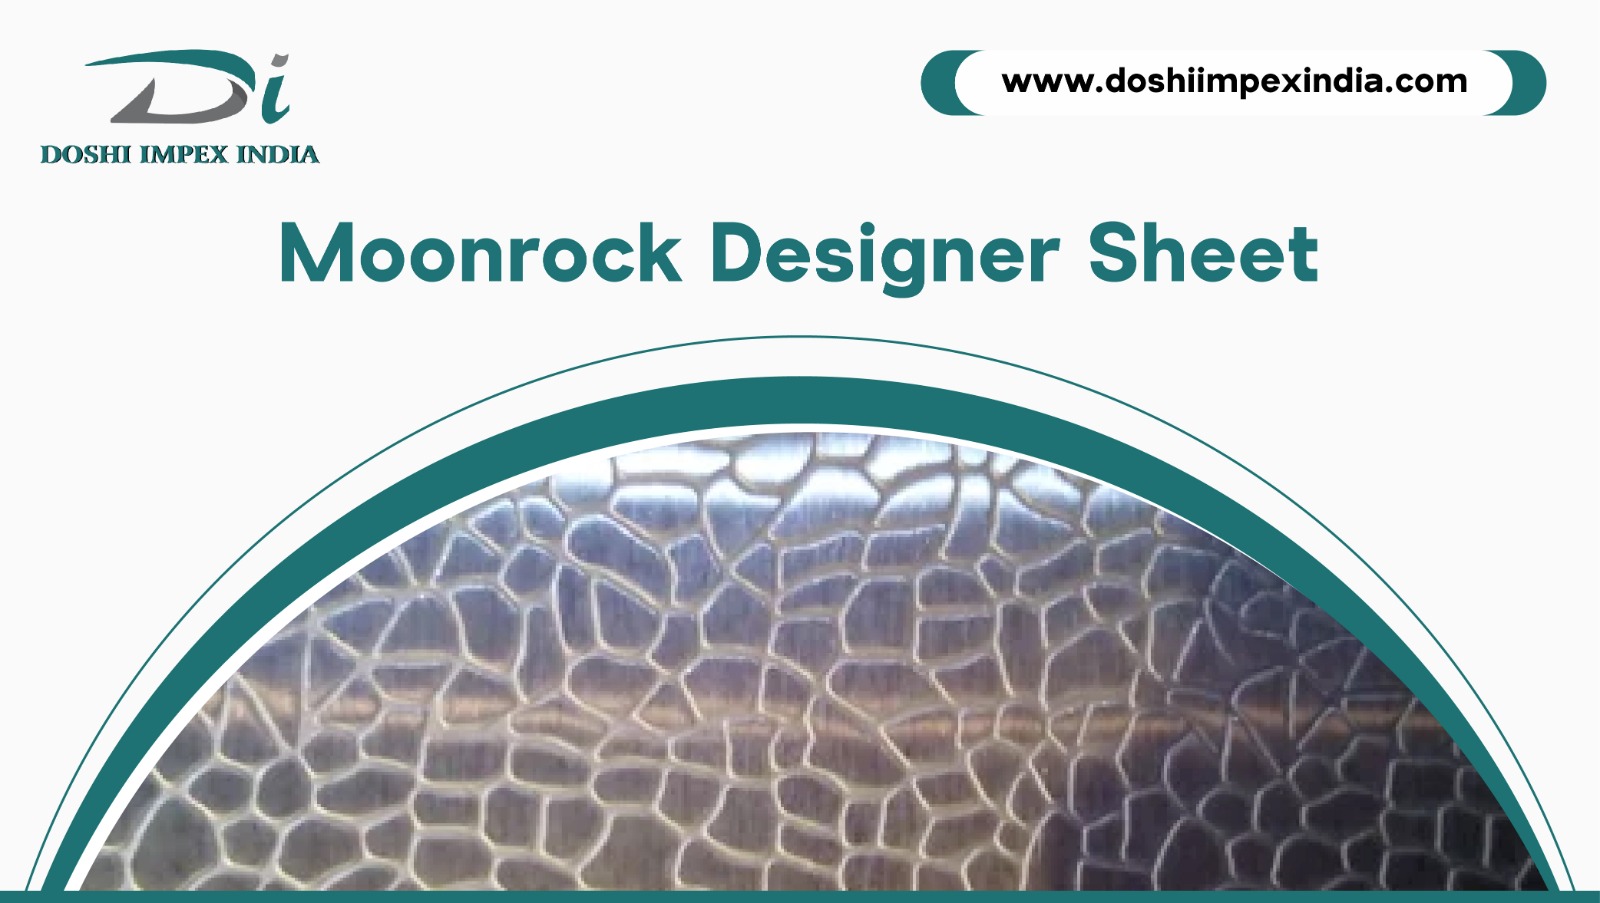 Moonrock Designer Sheet Applications and Benefits